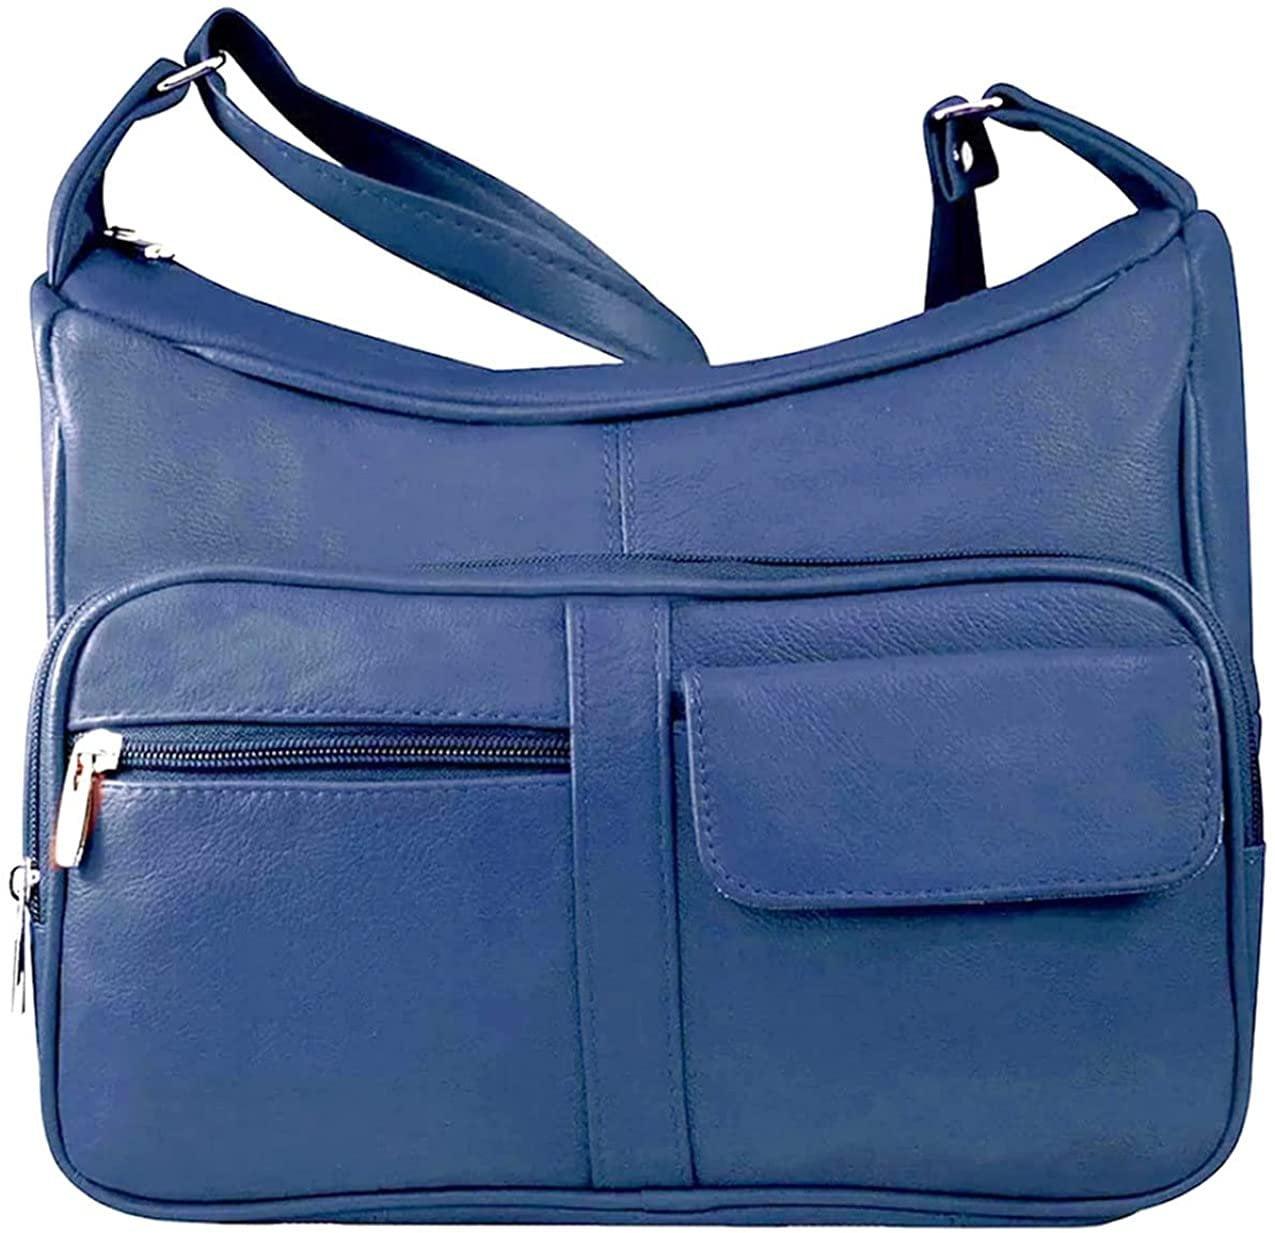 YZAOLL Purses for Women Faux Leather Medium Large Tote Satchel Shoulder Purse Handbag Wallet Set